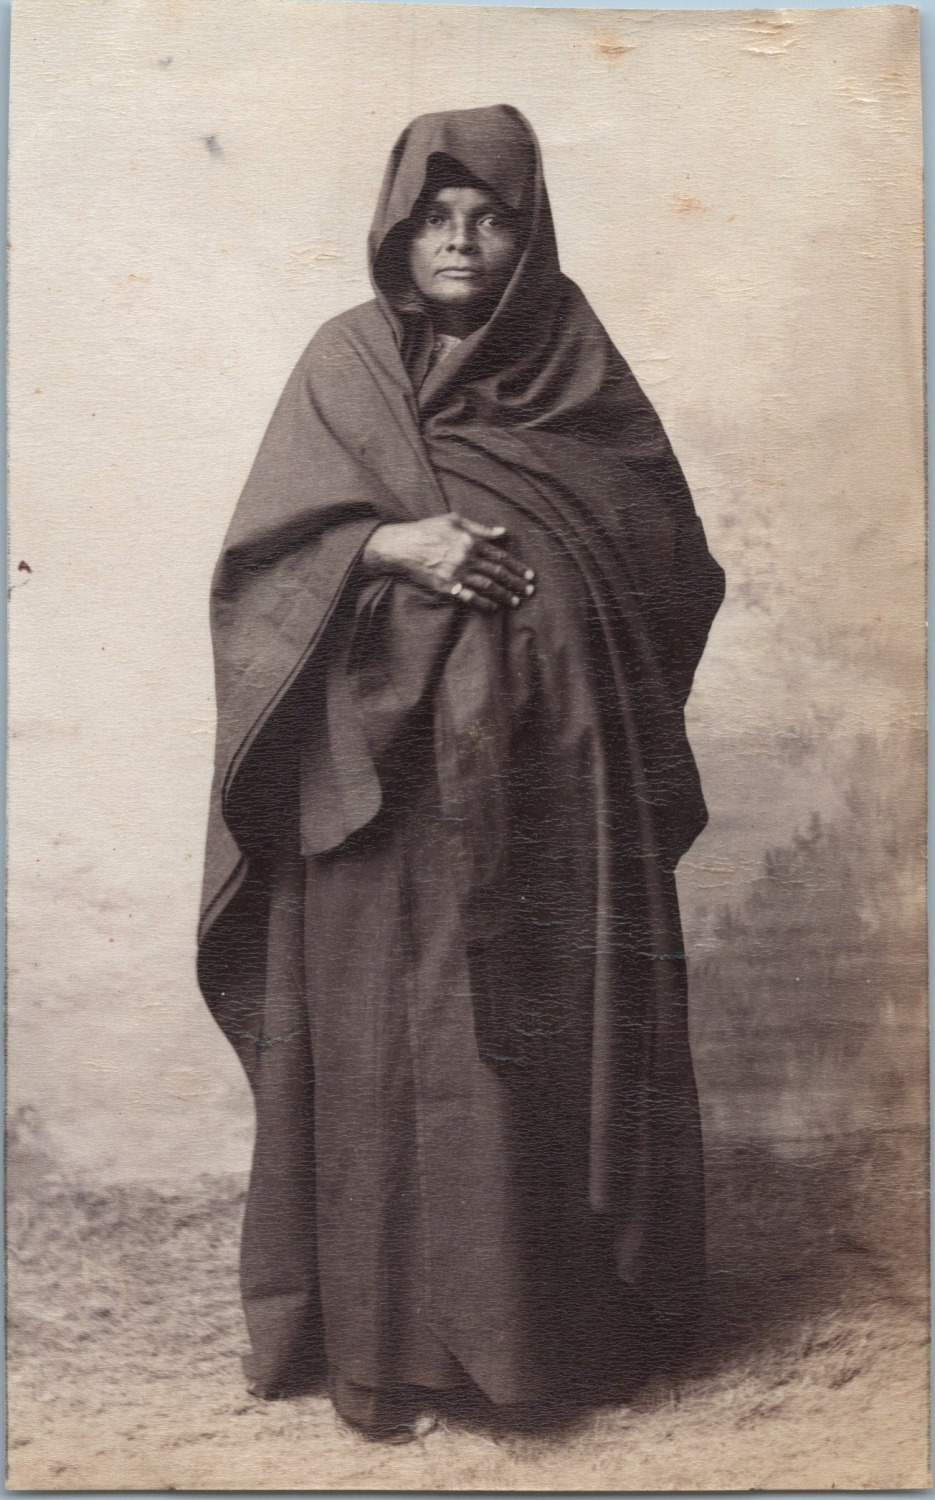 Angola, Luanda, Woman in Costume, Vintage Print, ca.1880 Vintage Print